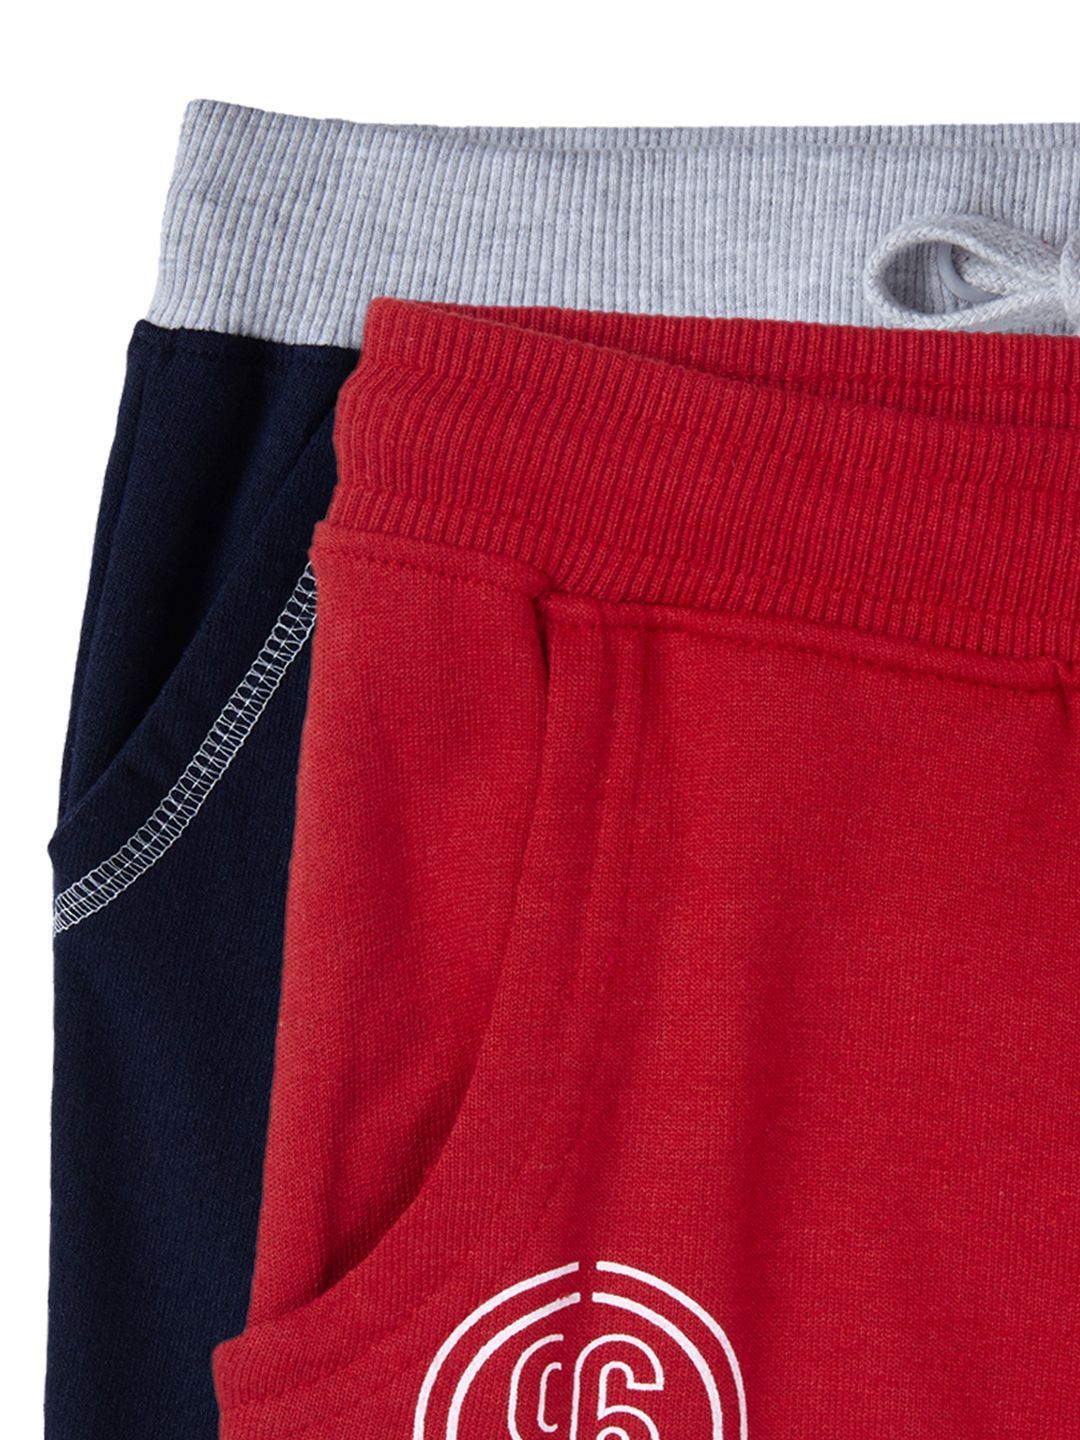 Worldwide Sportsman outdoor pants shorts combo convertible men's medium  green | eBay